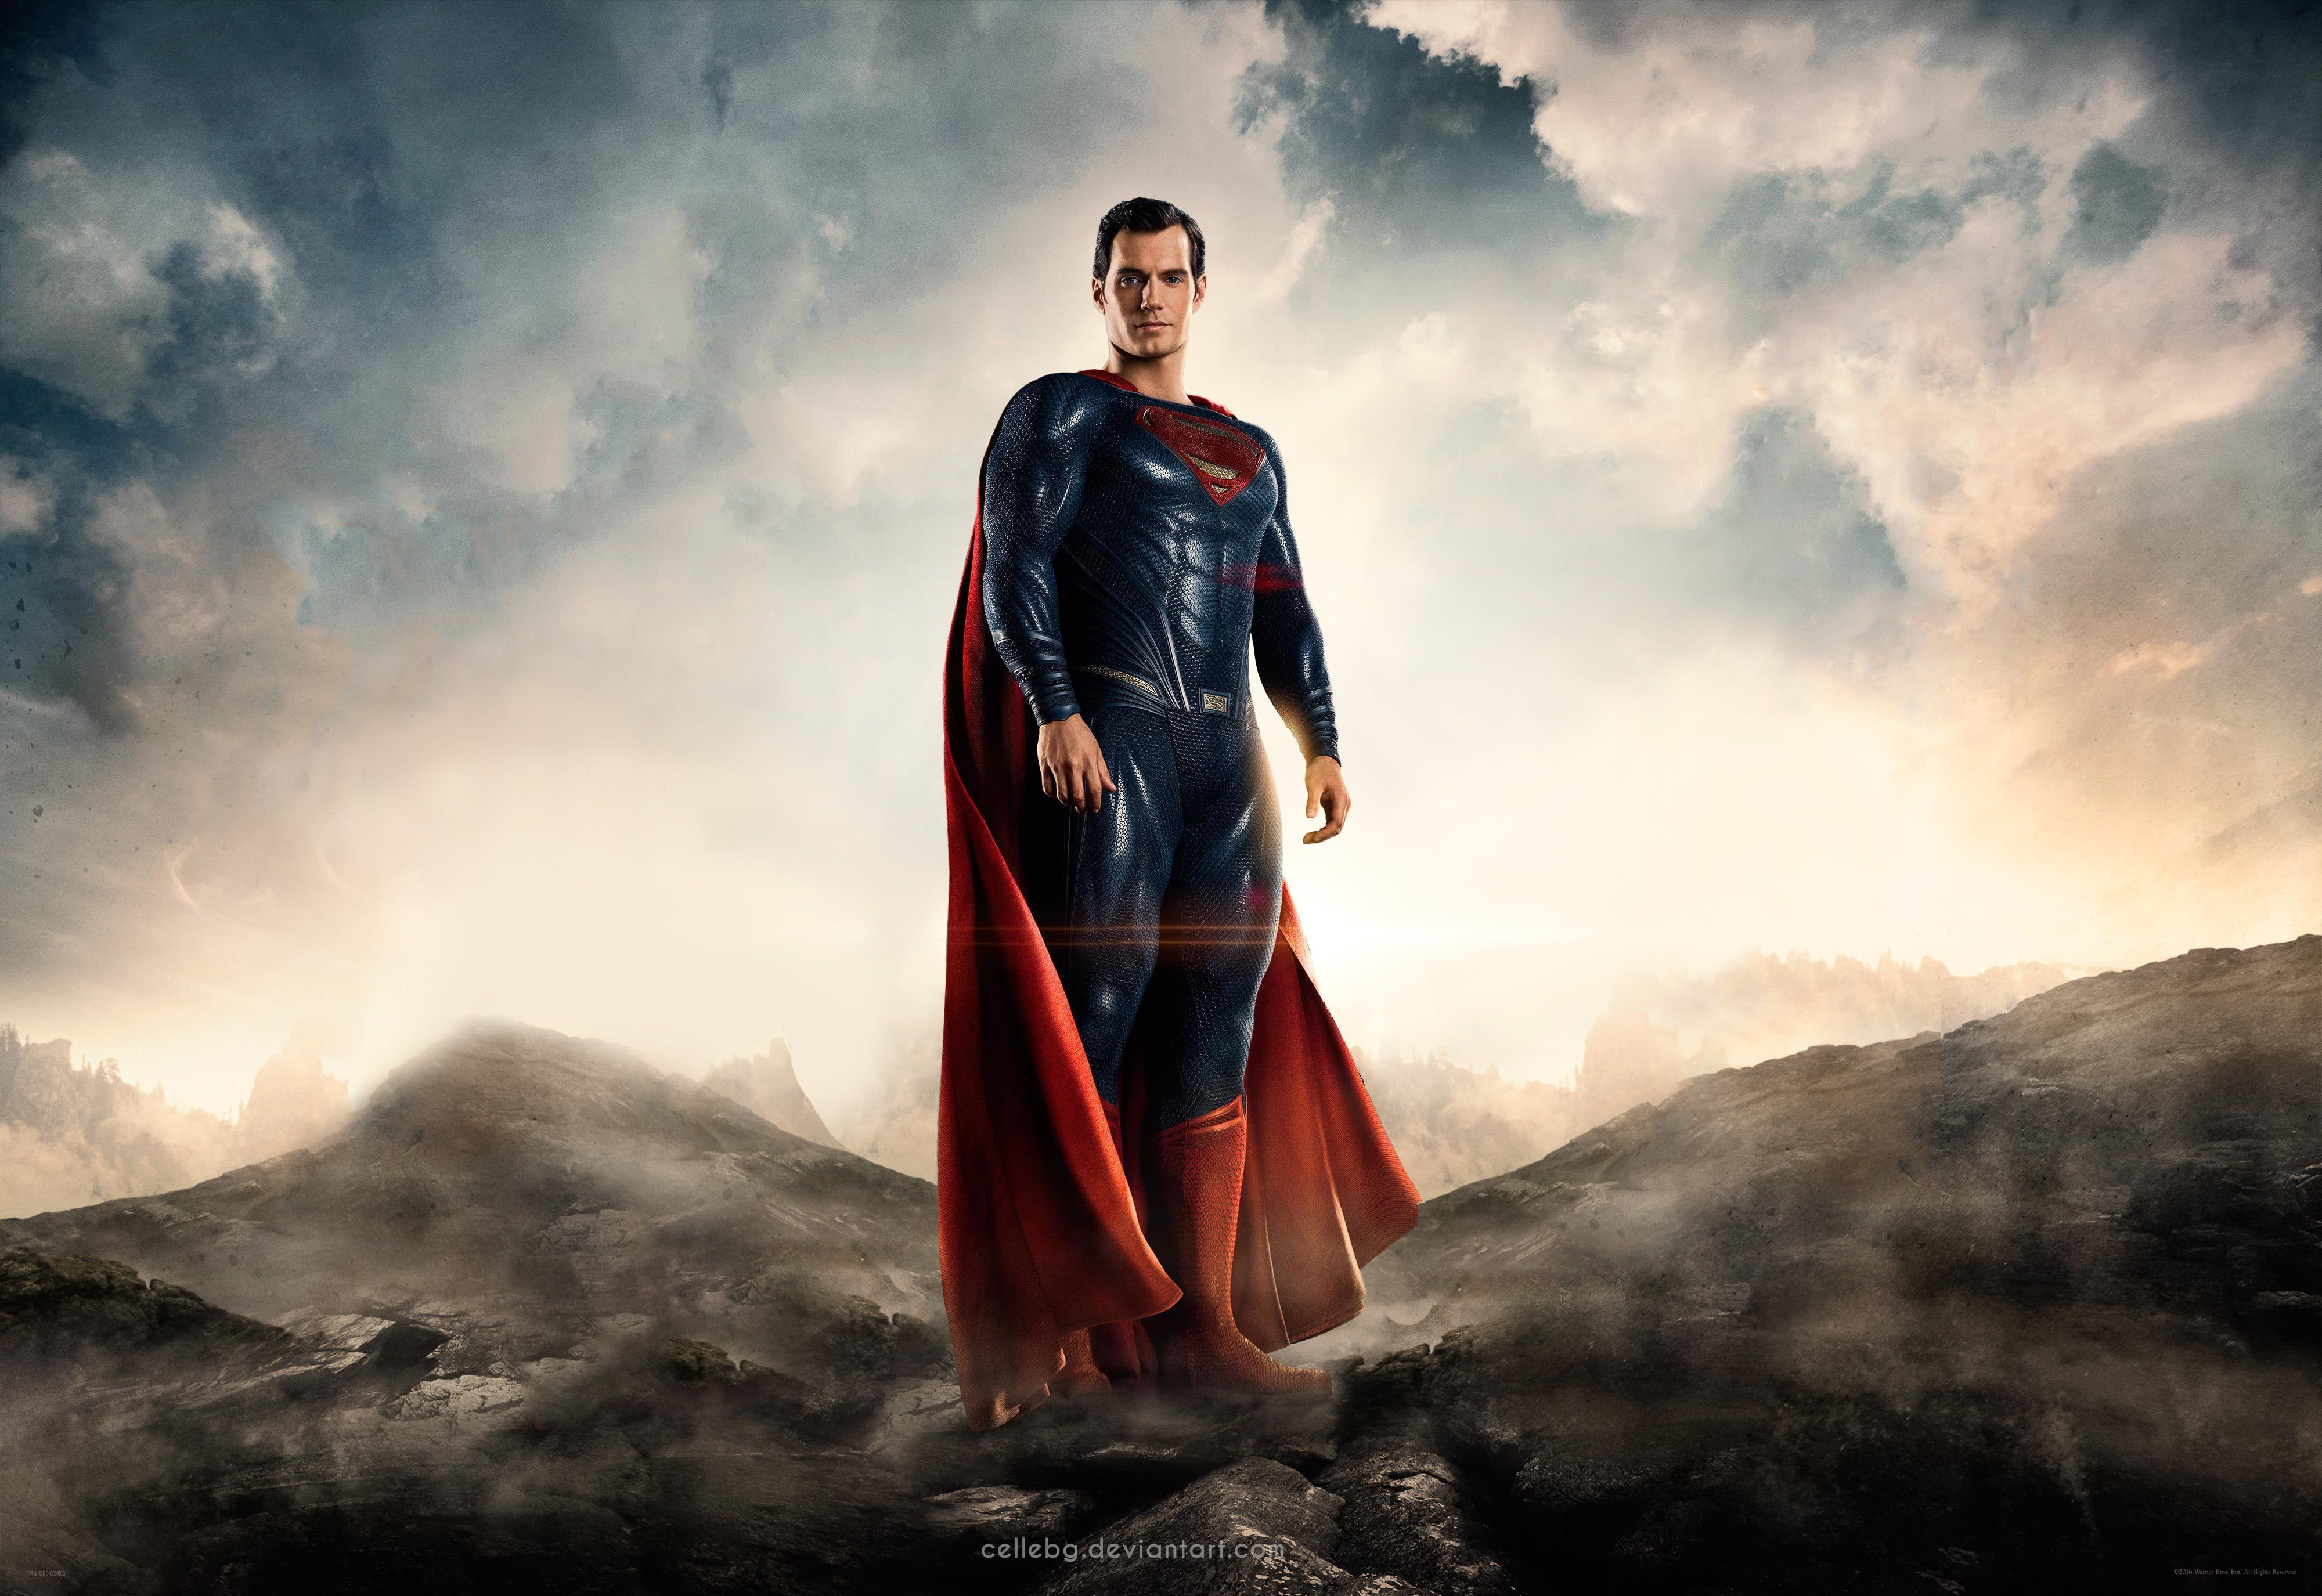 Movie Justice League Henry Cavill #Superman K #wallpaper #hdwallpaper #desktop. Superman, Justice league, Justice league 2017 superman